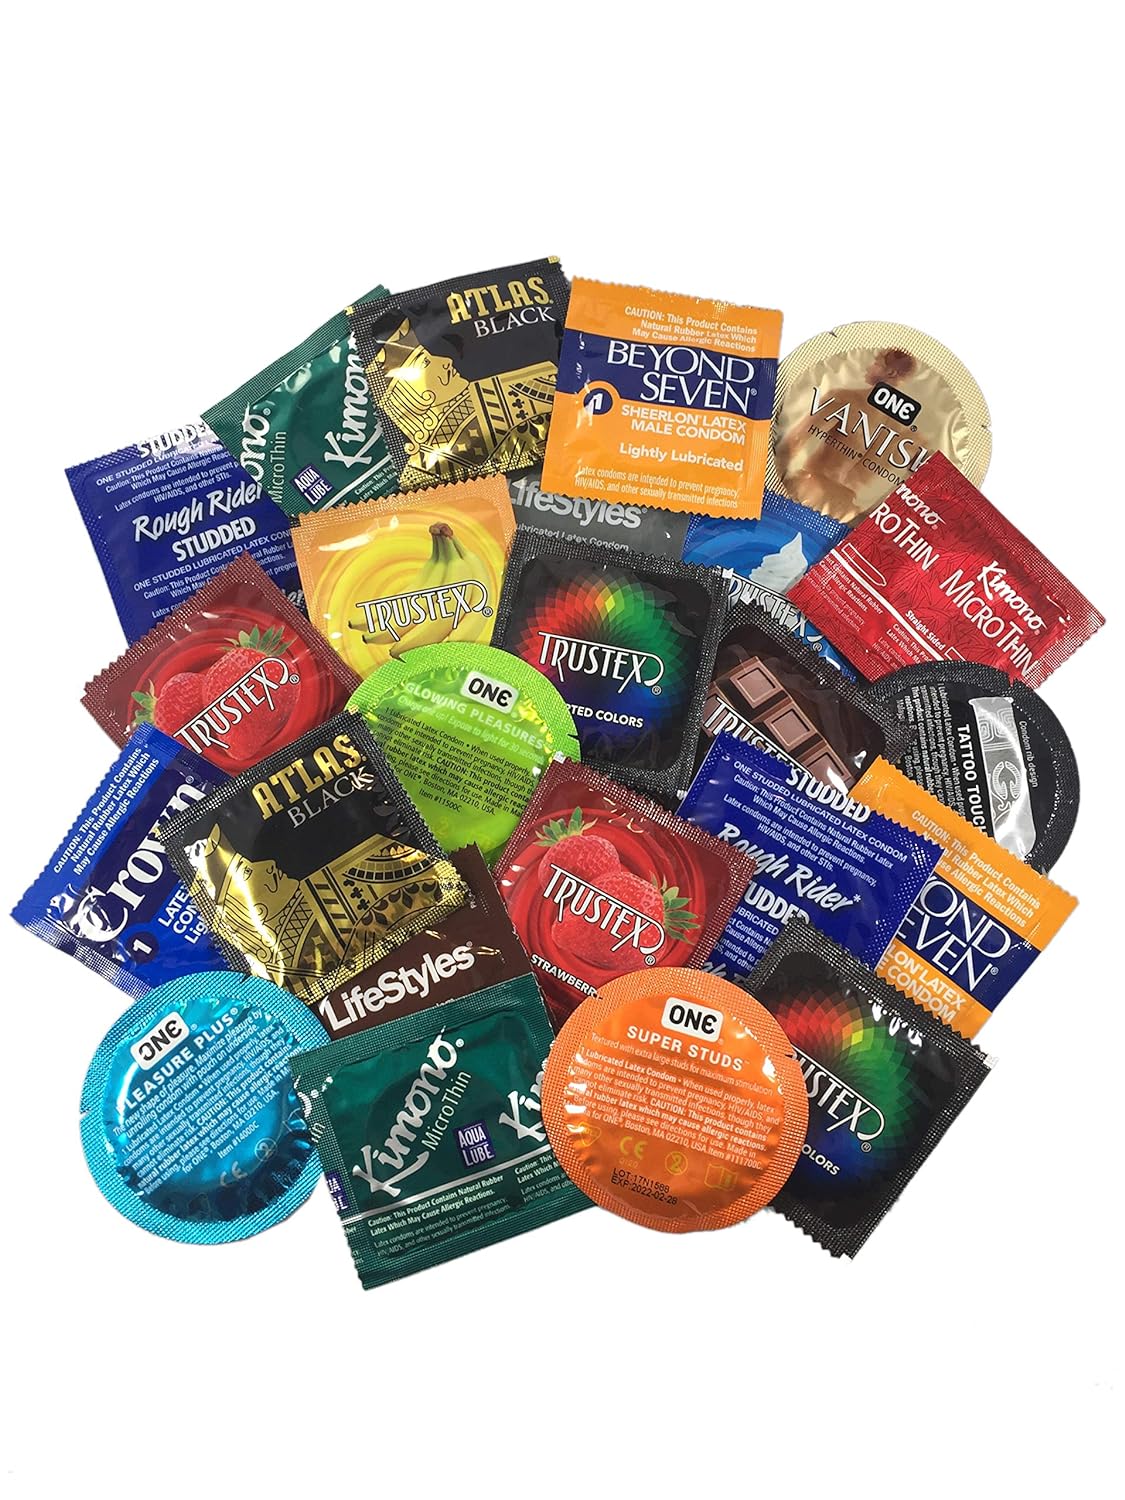 free condom sampler